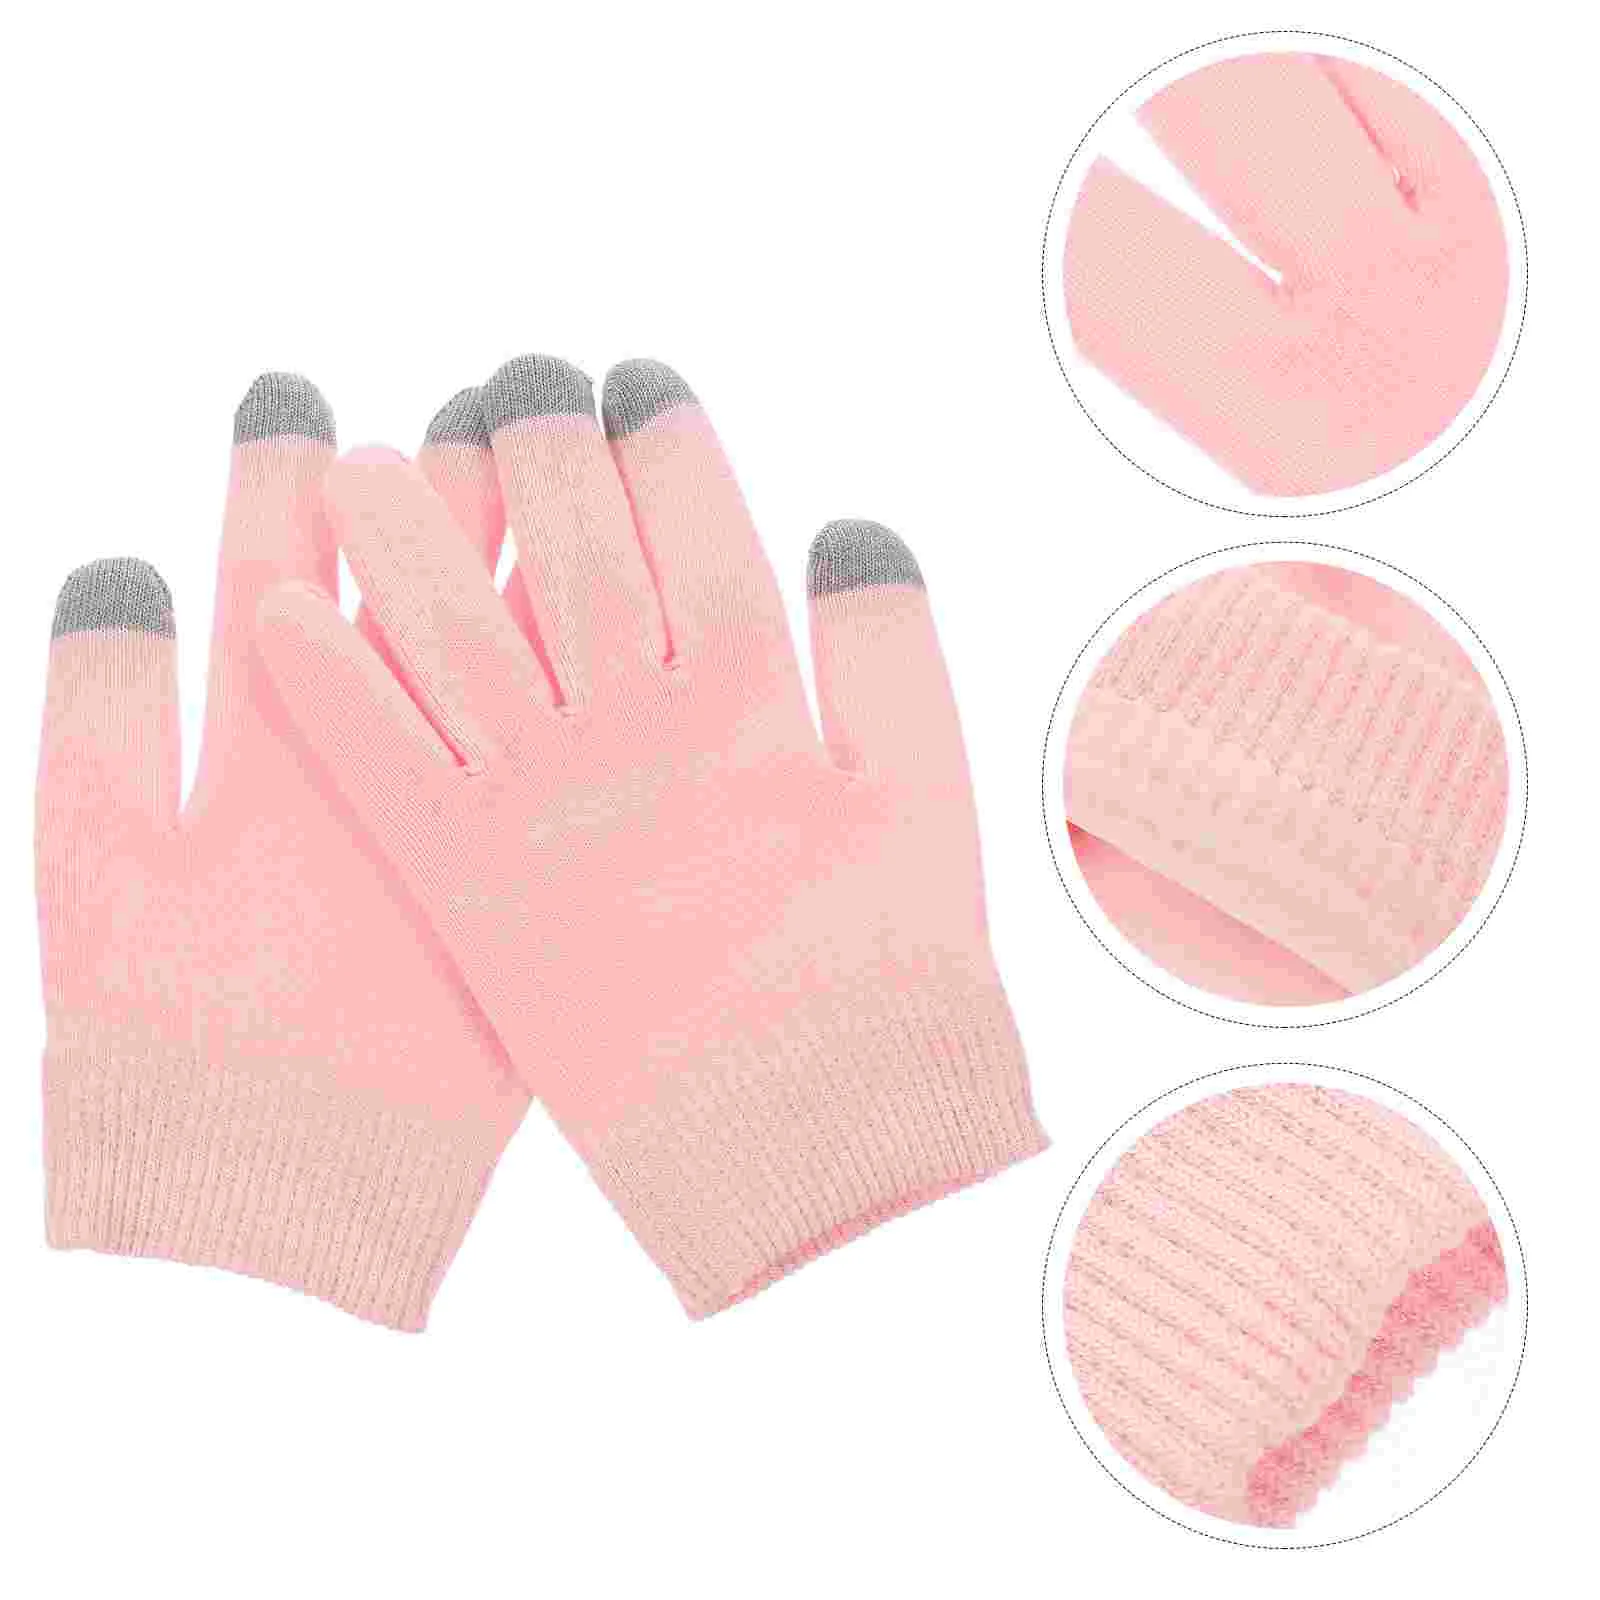 

Hand Caring Gloves Women Lotion Moisturizing Pink Ordinary Casual Socks Moisturizer Gel Dry Cracked